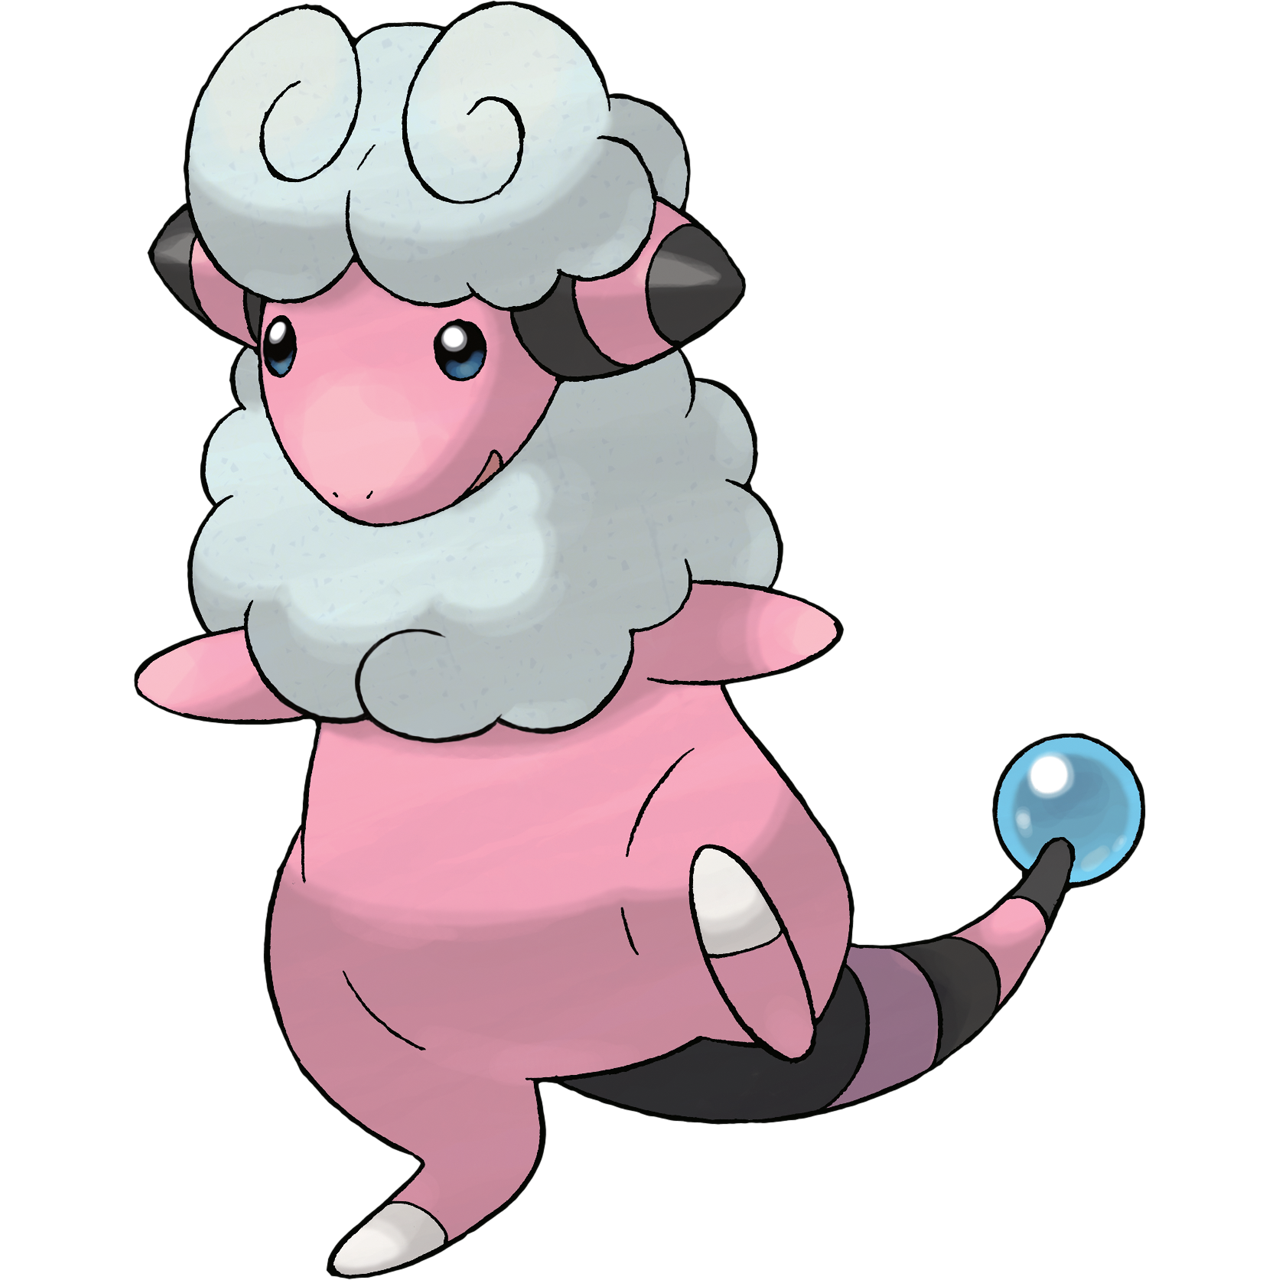 Mareep (Japanese: メリープ Merriep) is an Electric -type Pokémon. 